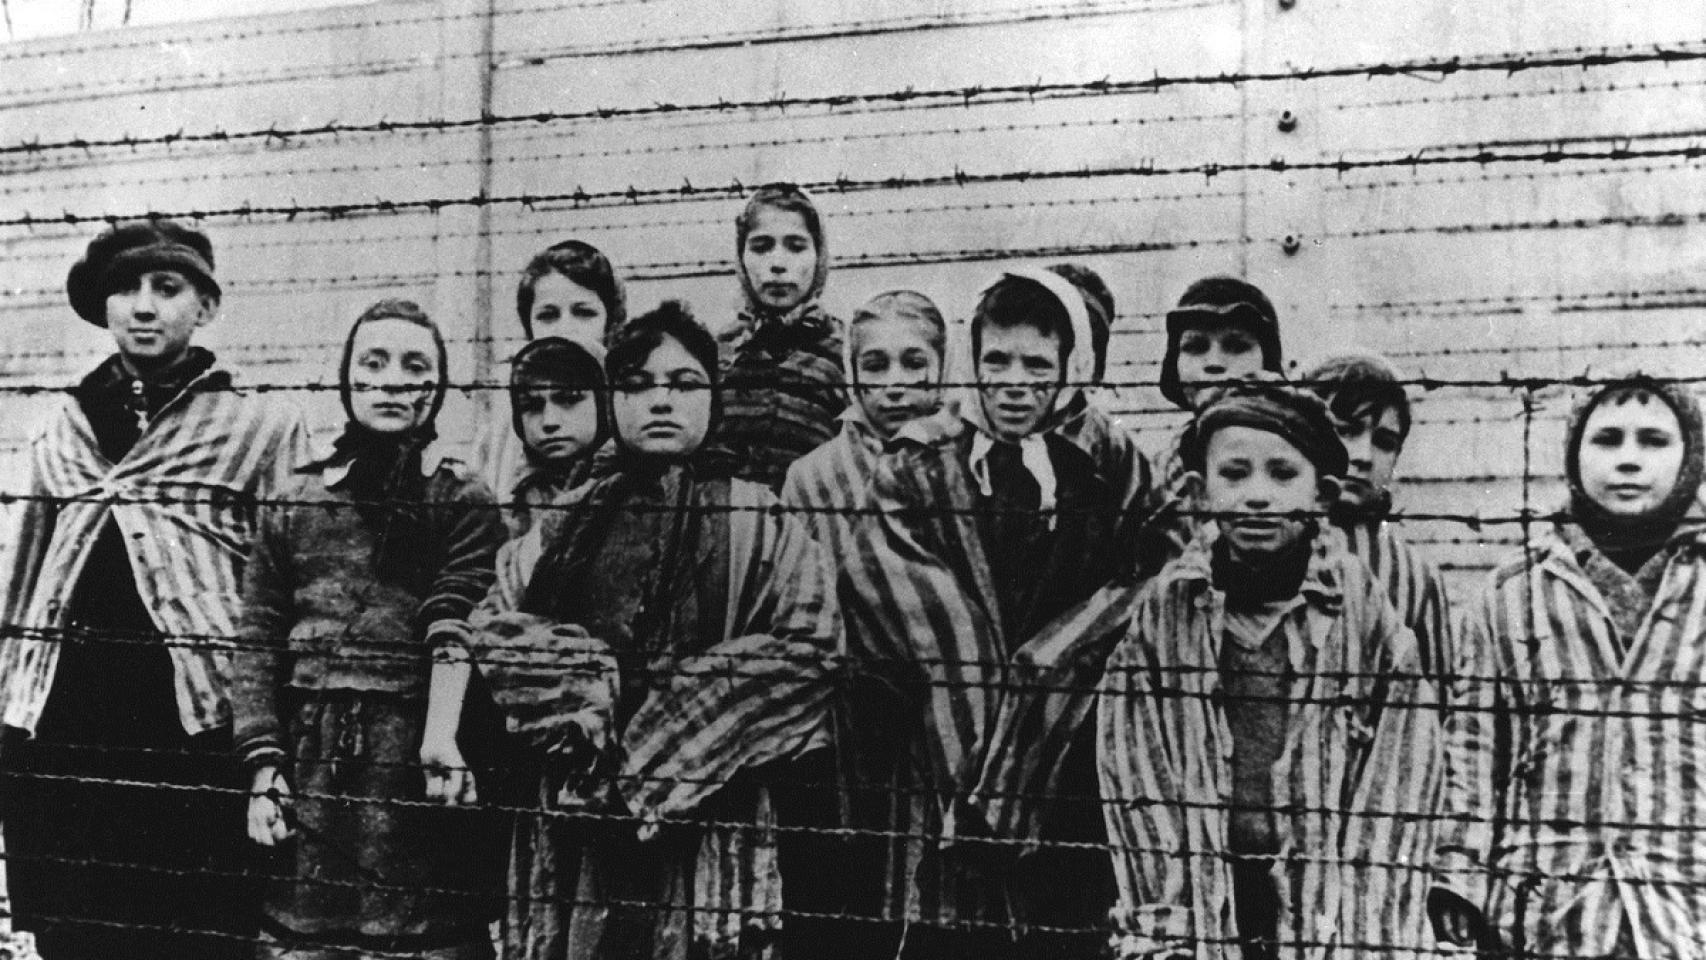 Holocausto.